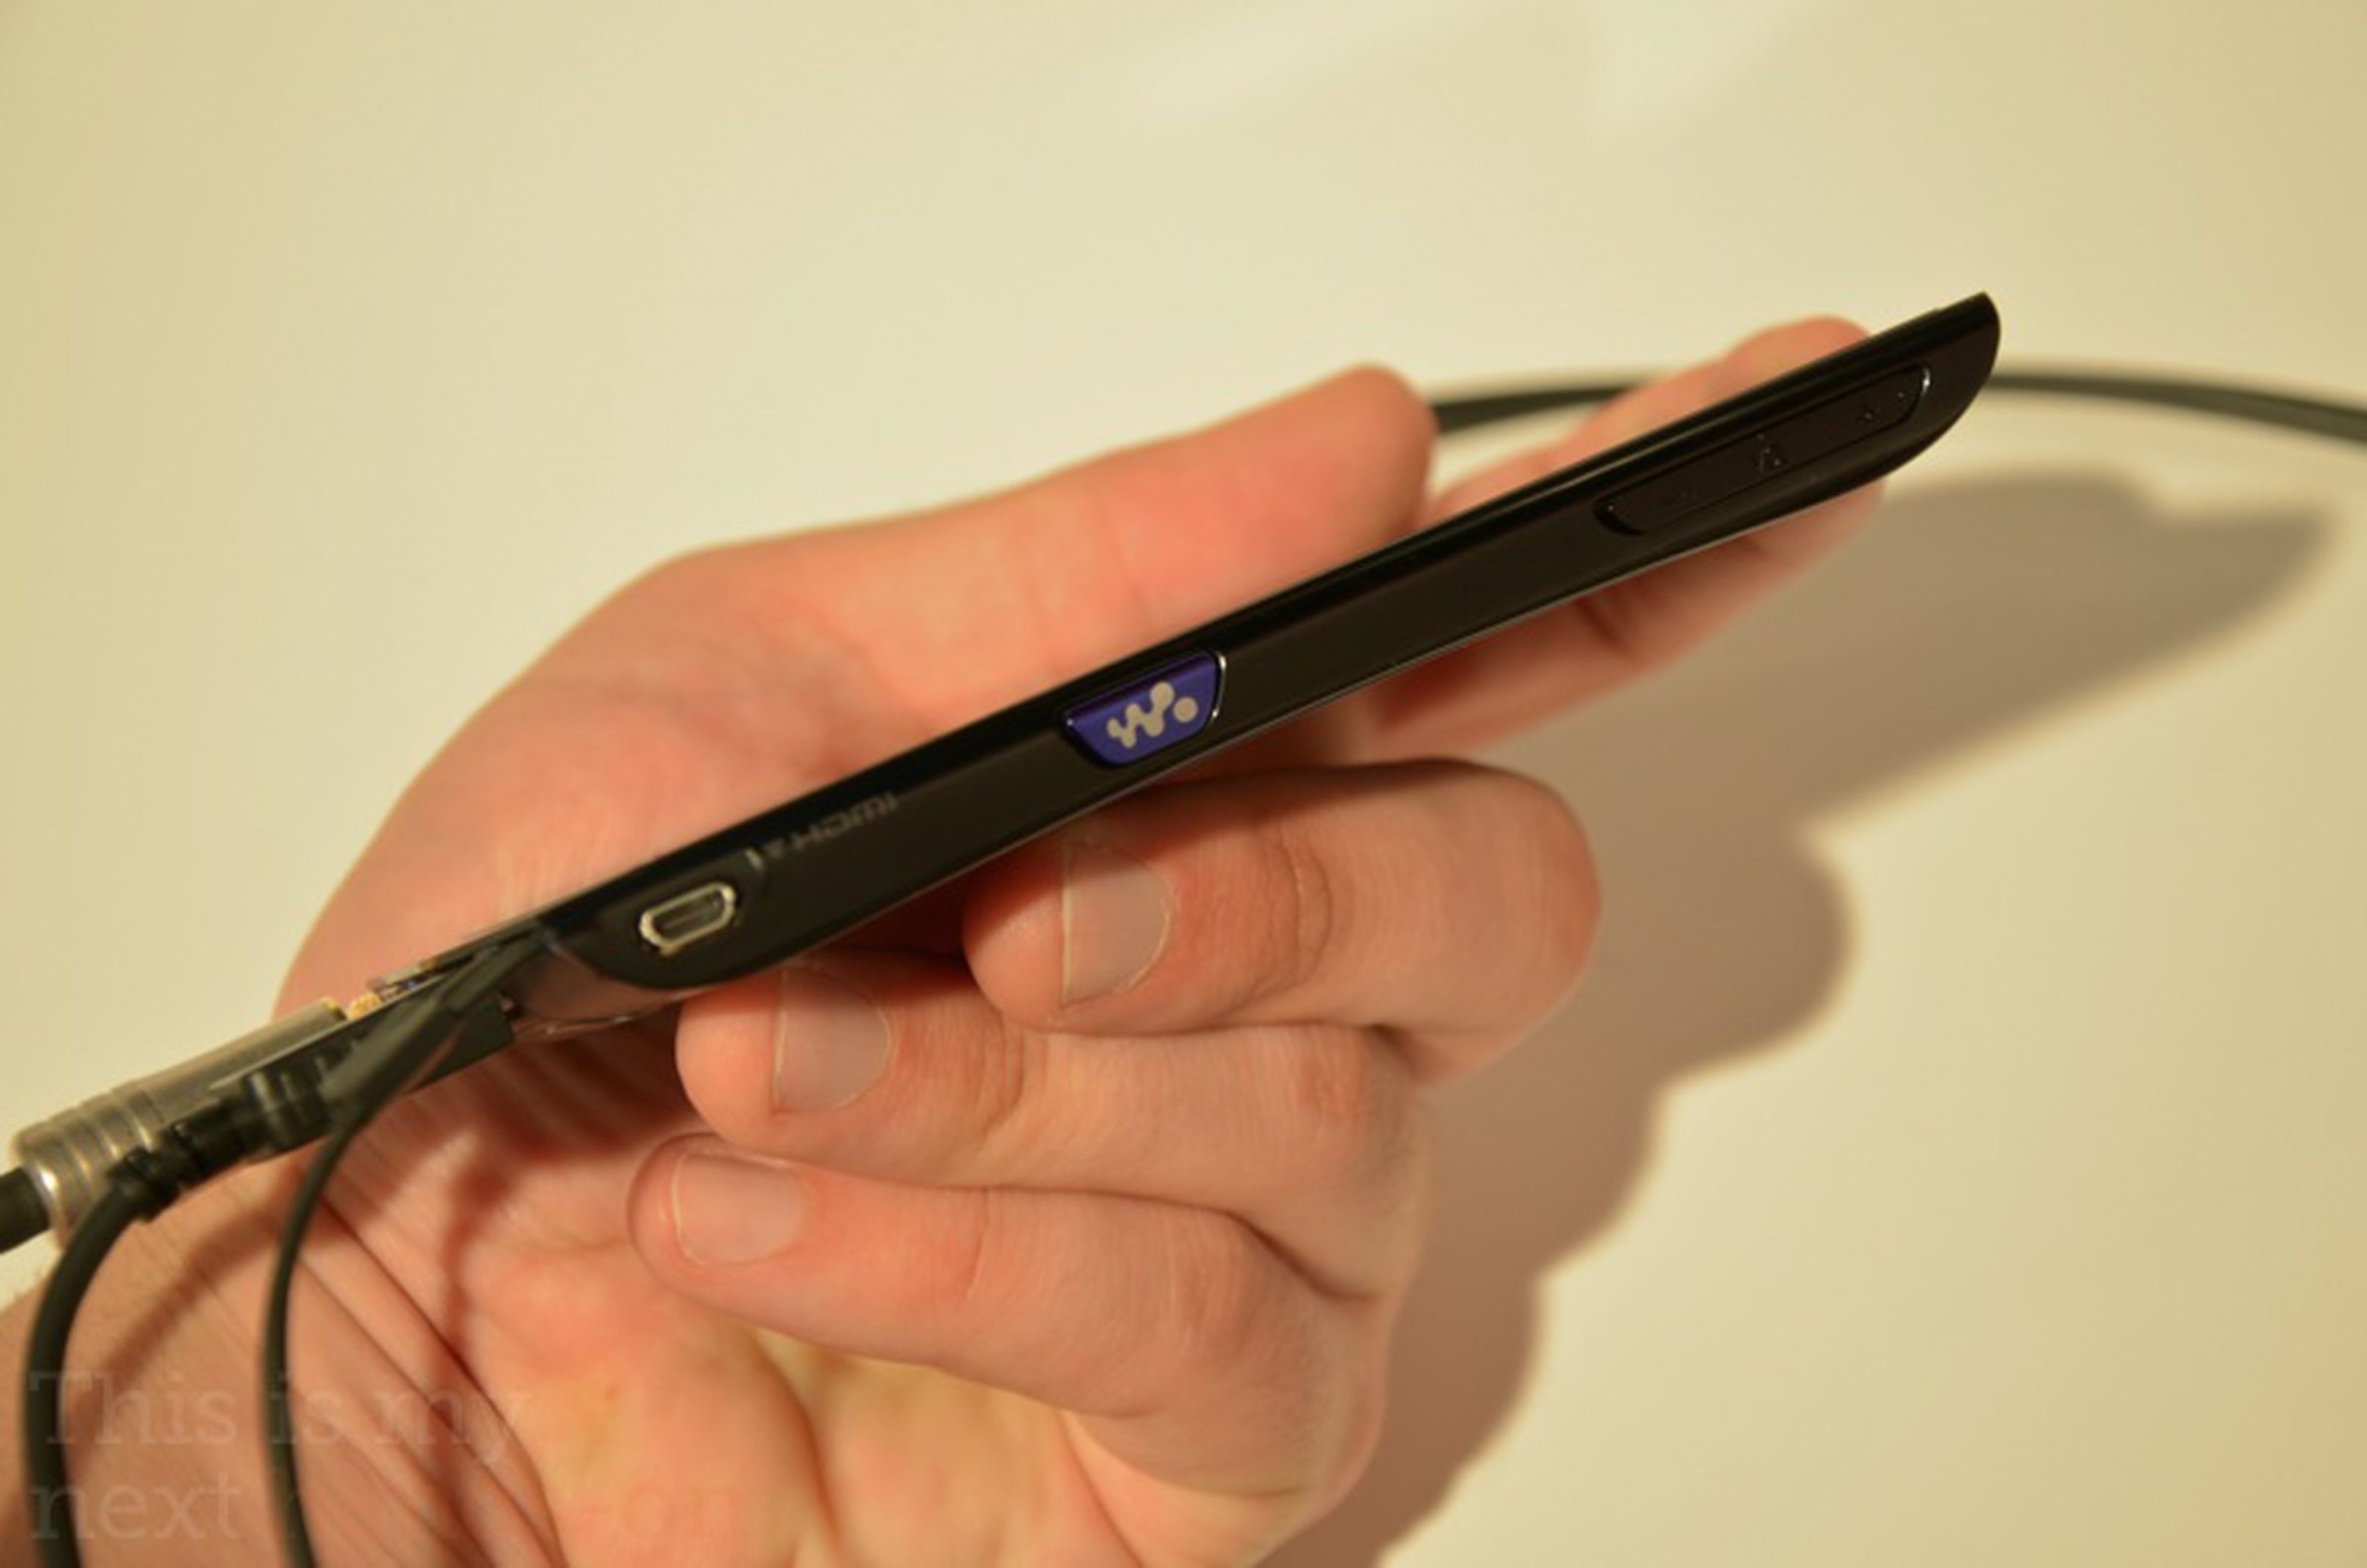 Sony Android Walkman prototype hands-on photos